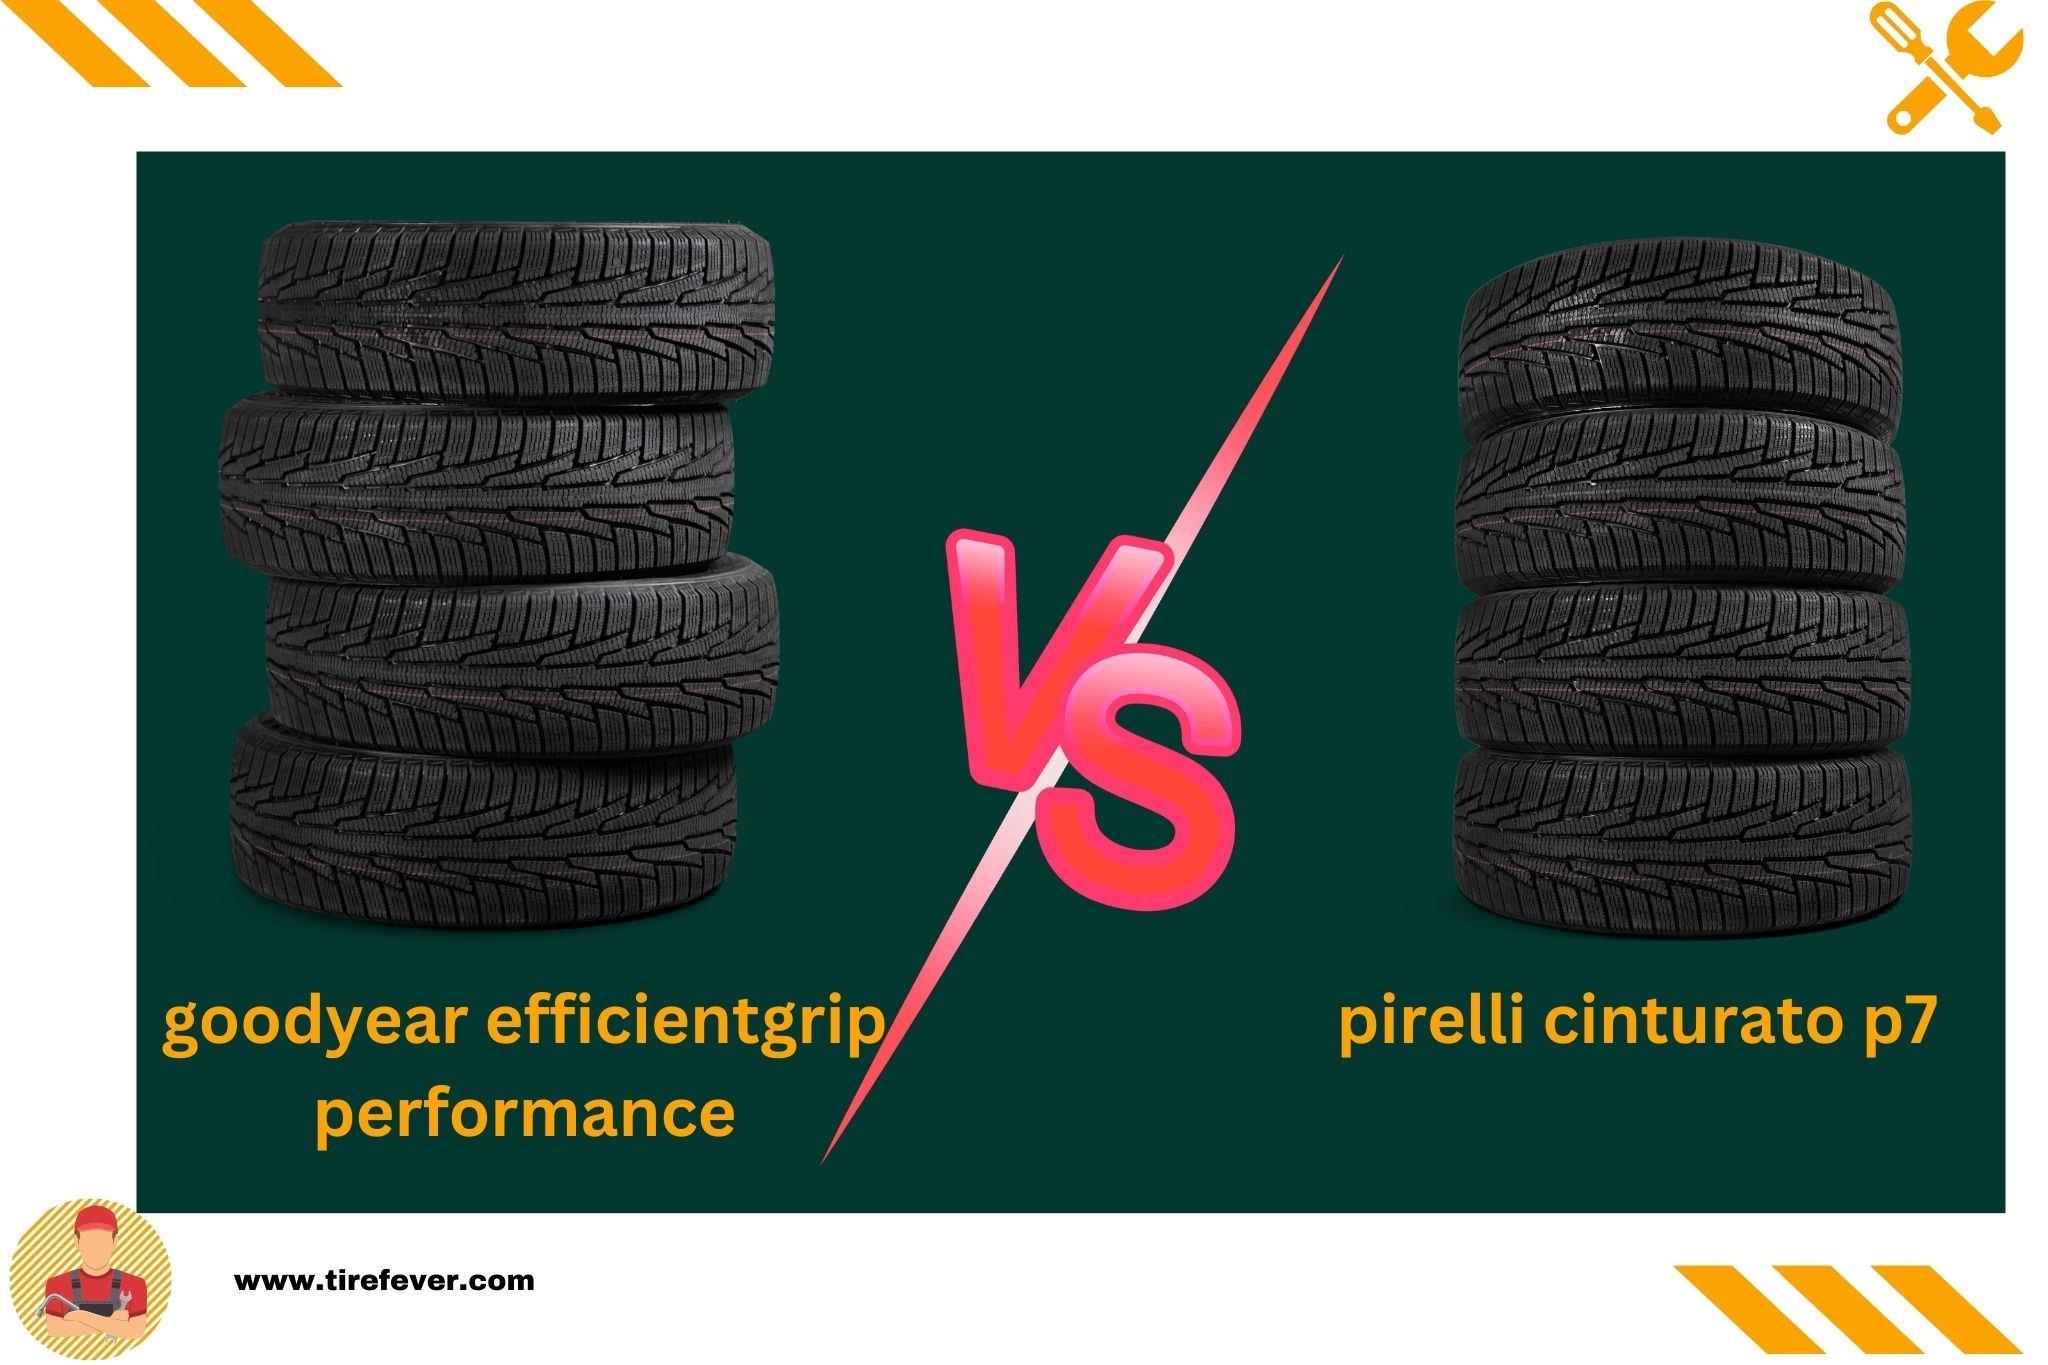 goodyear efficientgrip performance vs pirelli cinturato p7